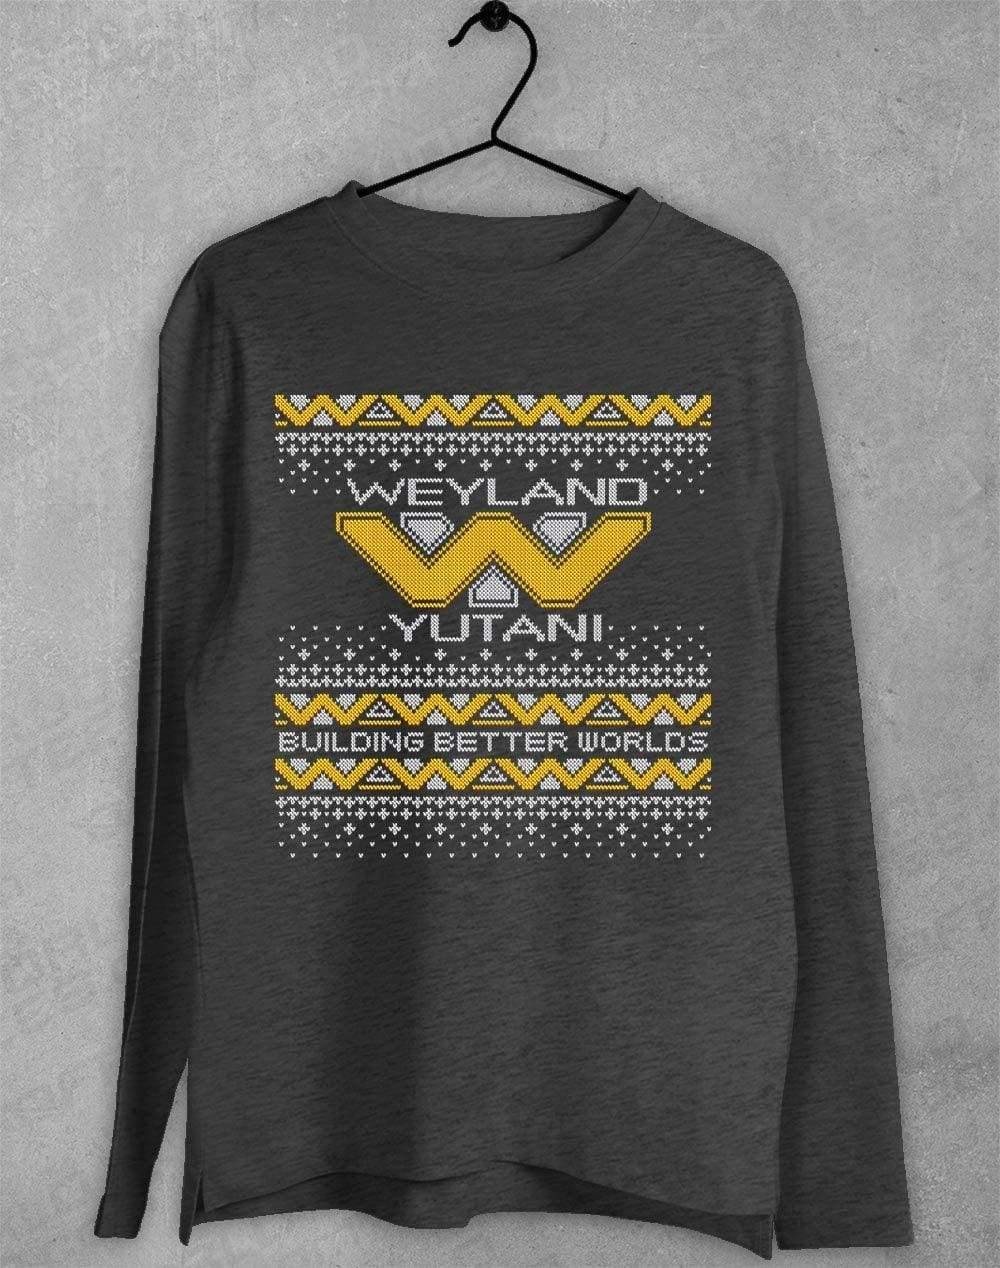 Weyland Yutani Festive Knitted-Look Long Sleeve T-Shirt S / Dark Heather  - Off World Tees